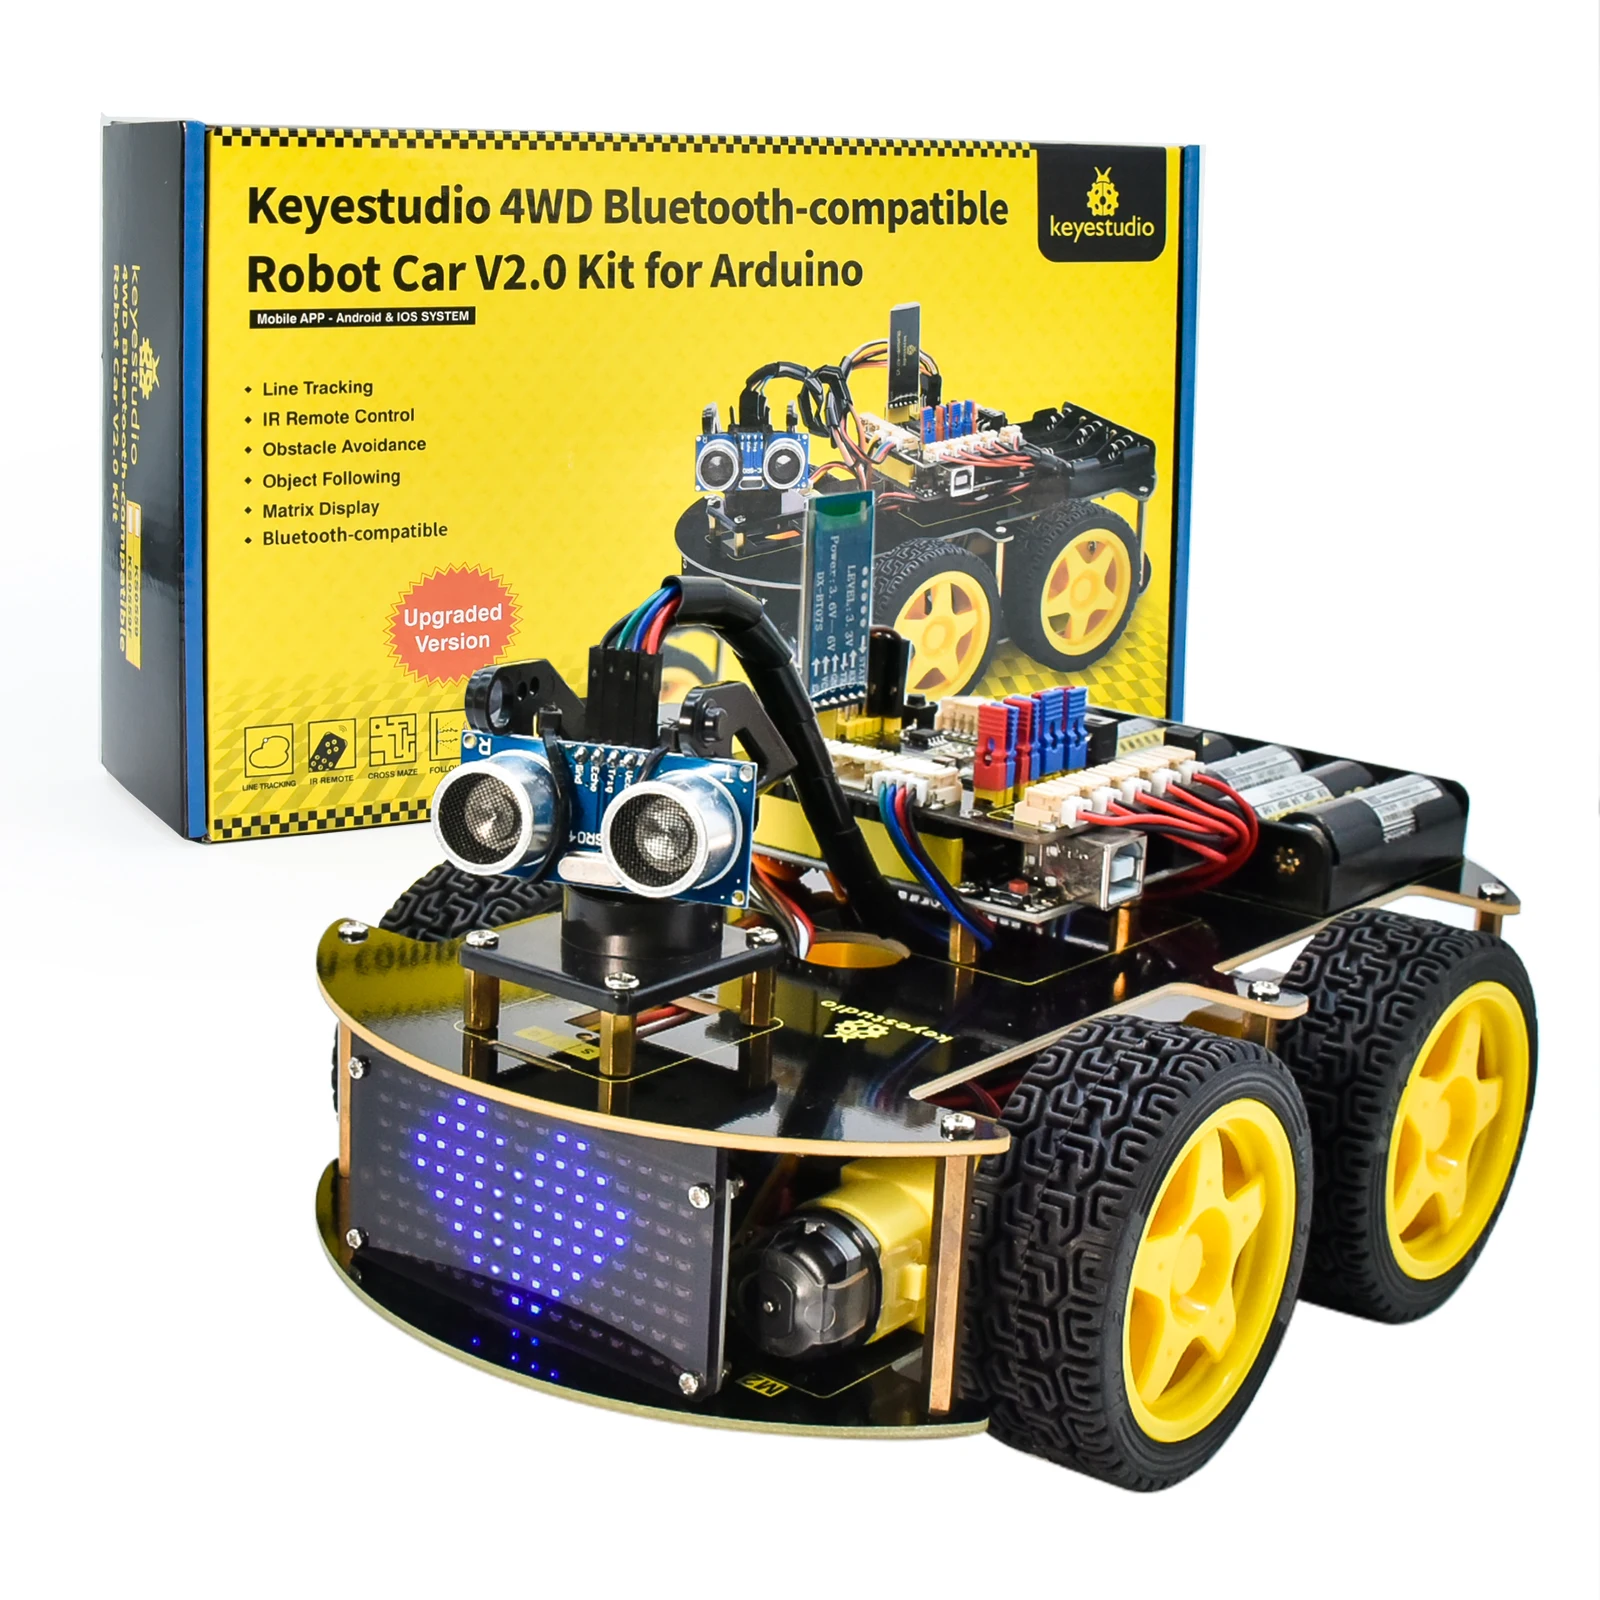 Tanio Keyestudio 4WD Multi BT samochód Robot Kit